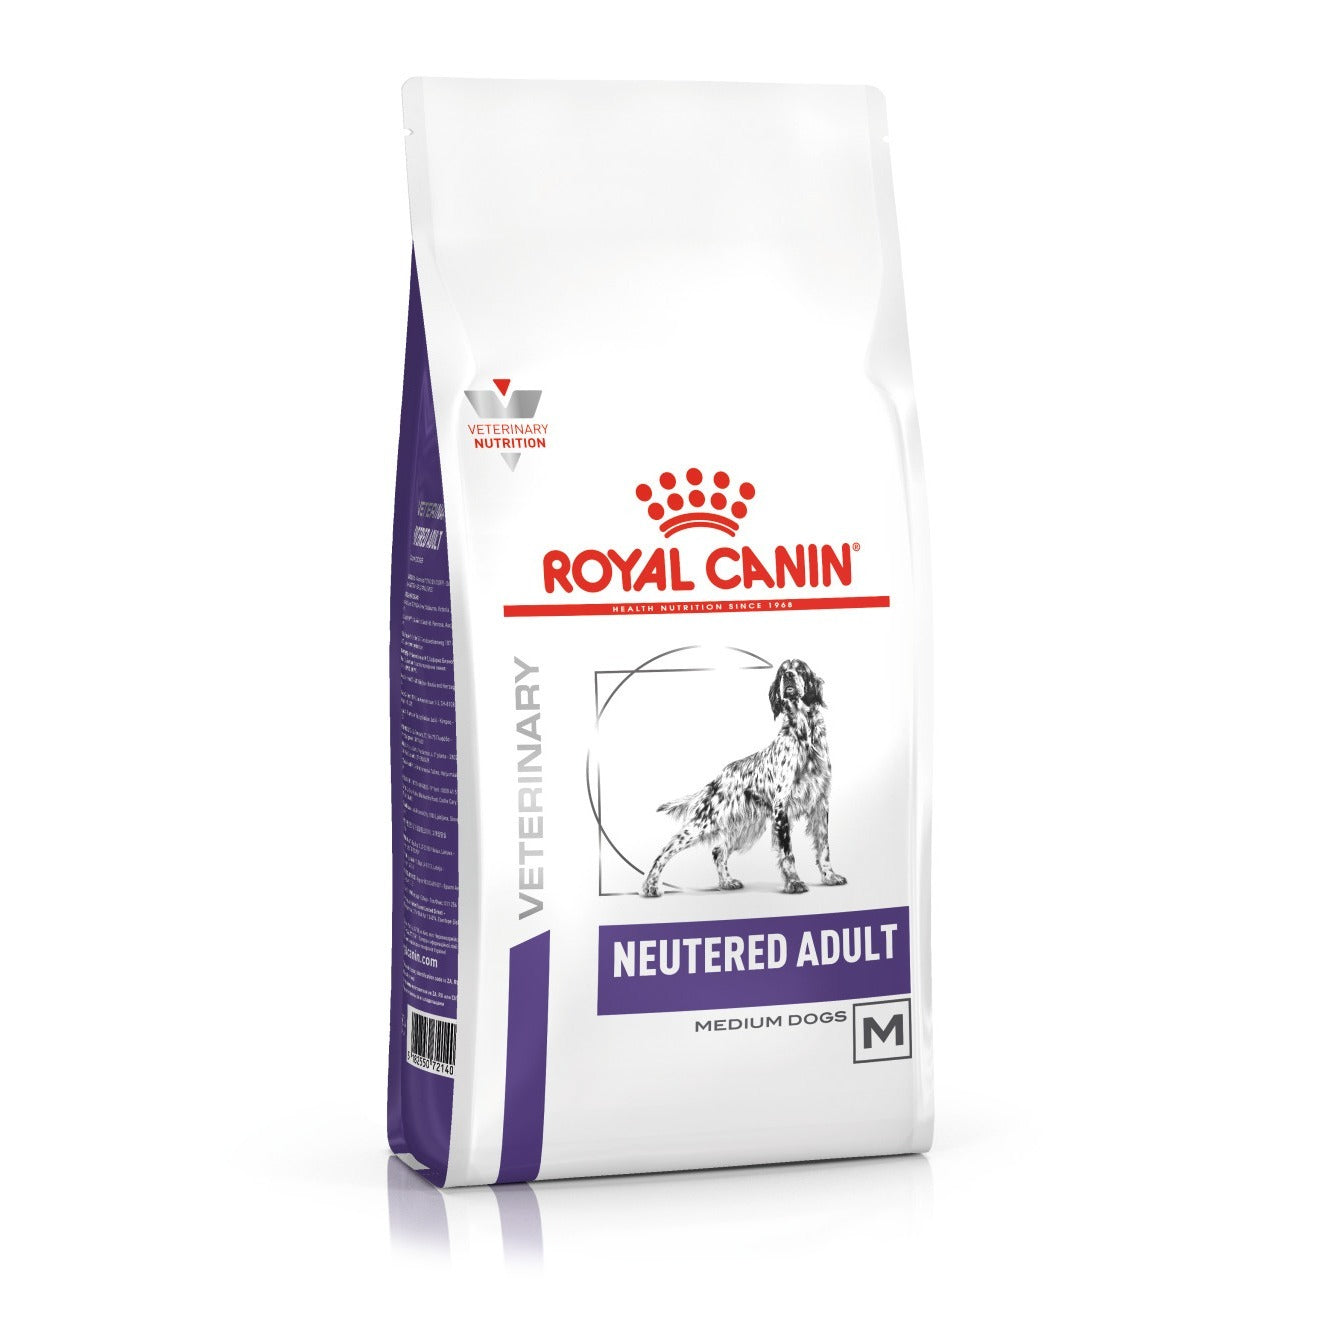 ROYAL CANIN® Neutered Adult Medium Dog Dry Food